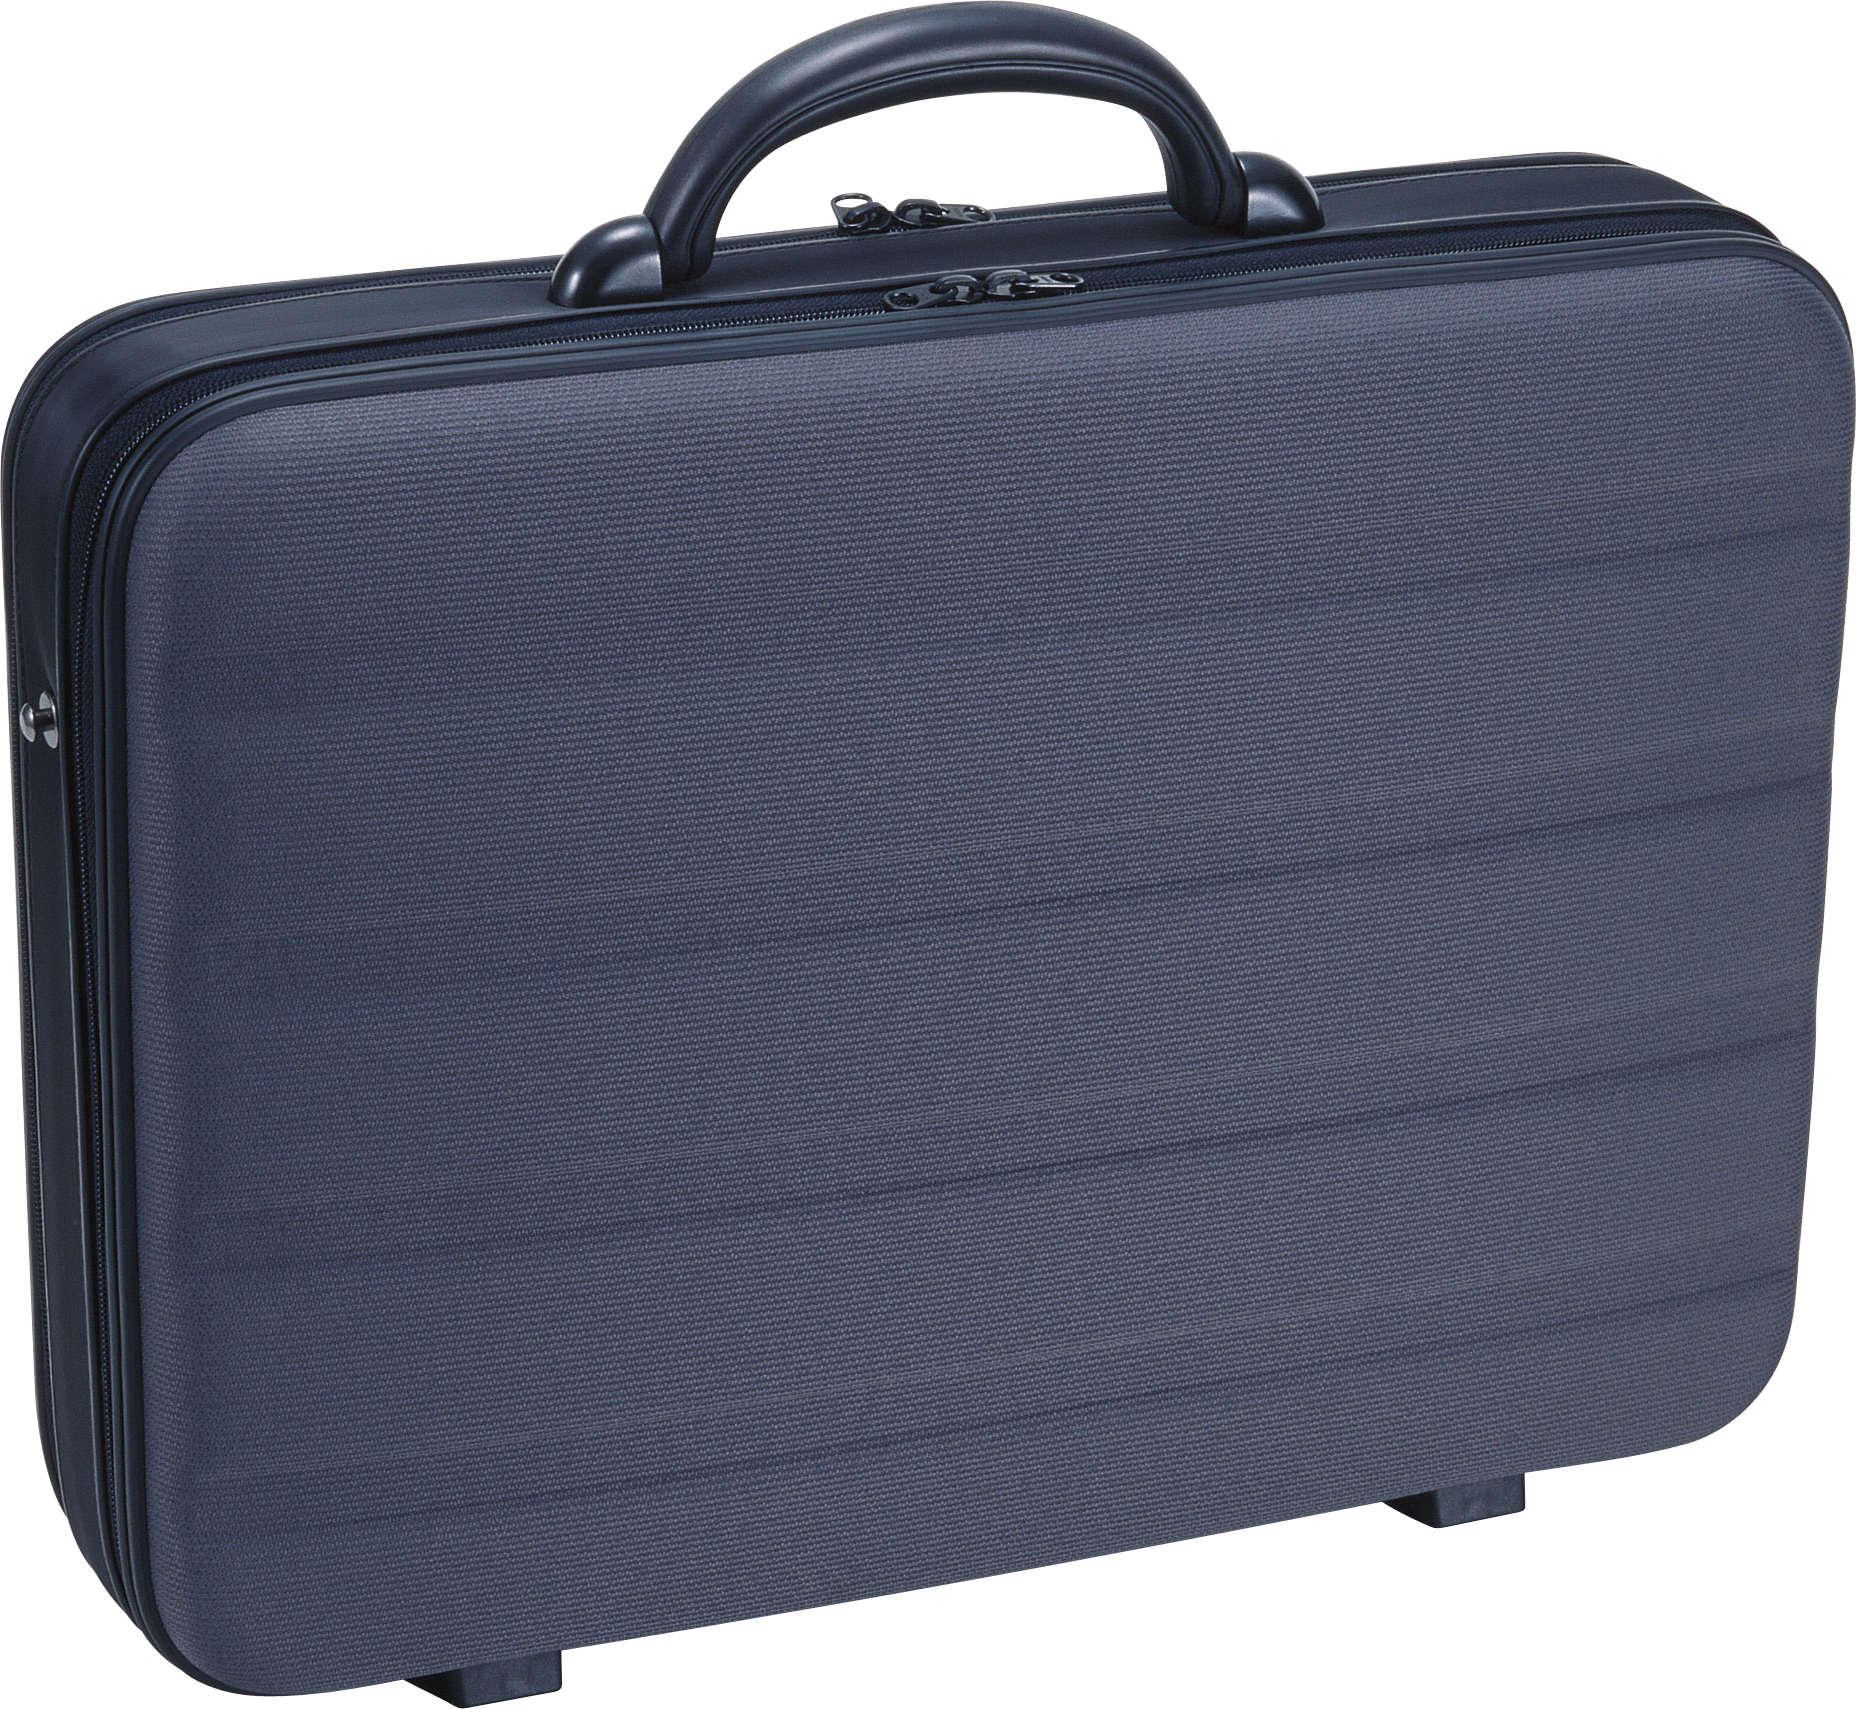 Suitcase (1856x1709)